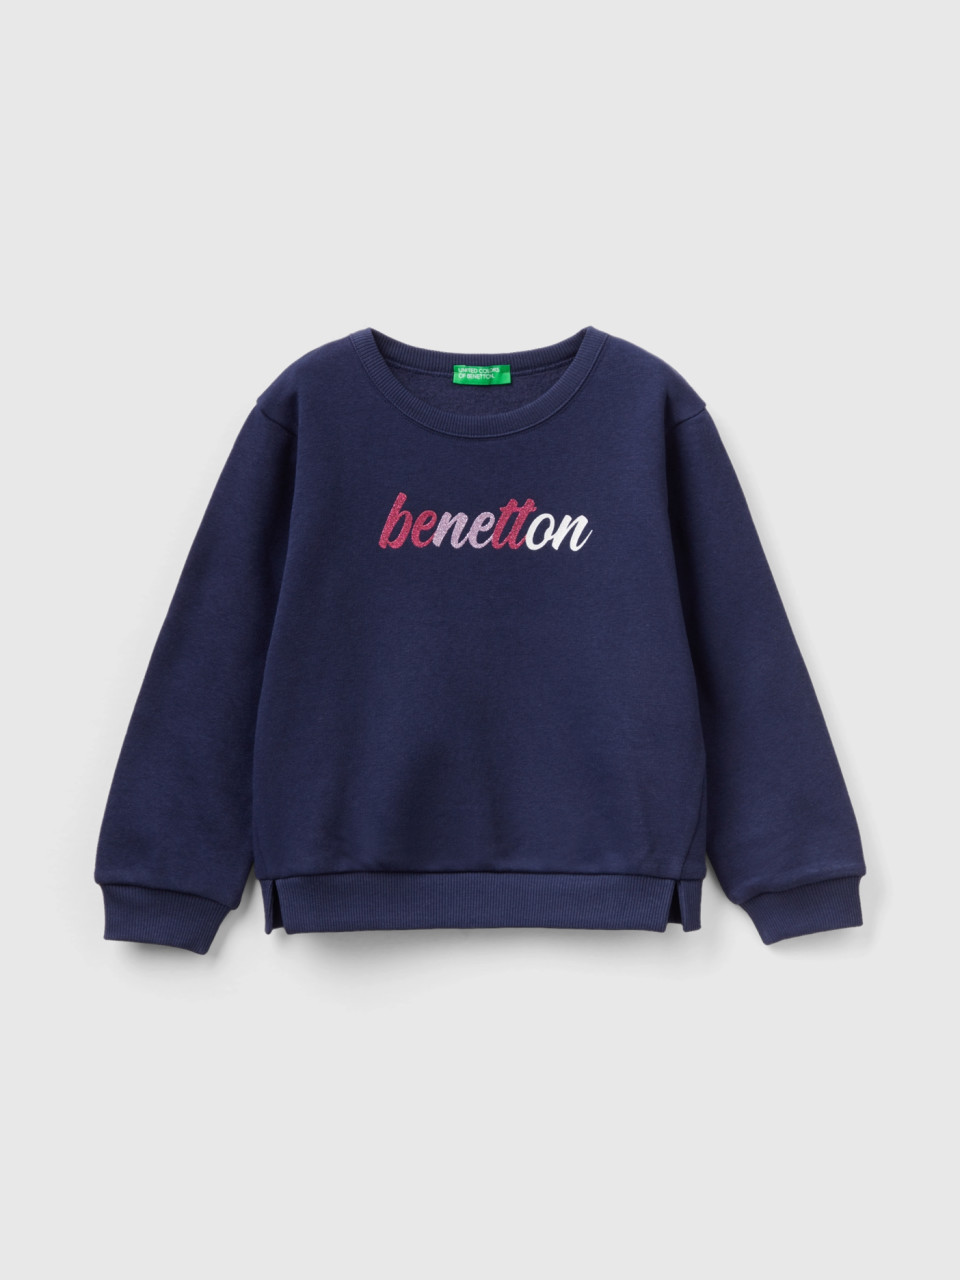 Benetton, Pullover Sweatshirt With Glittery Print, Dark Blue, Kids